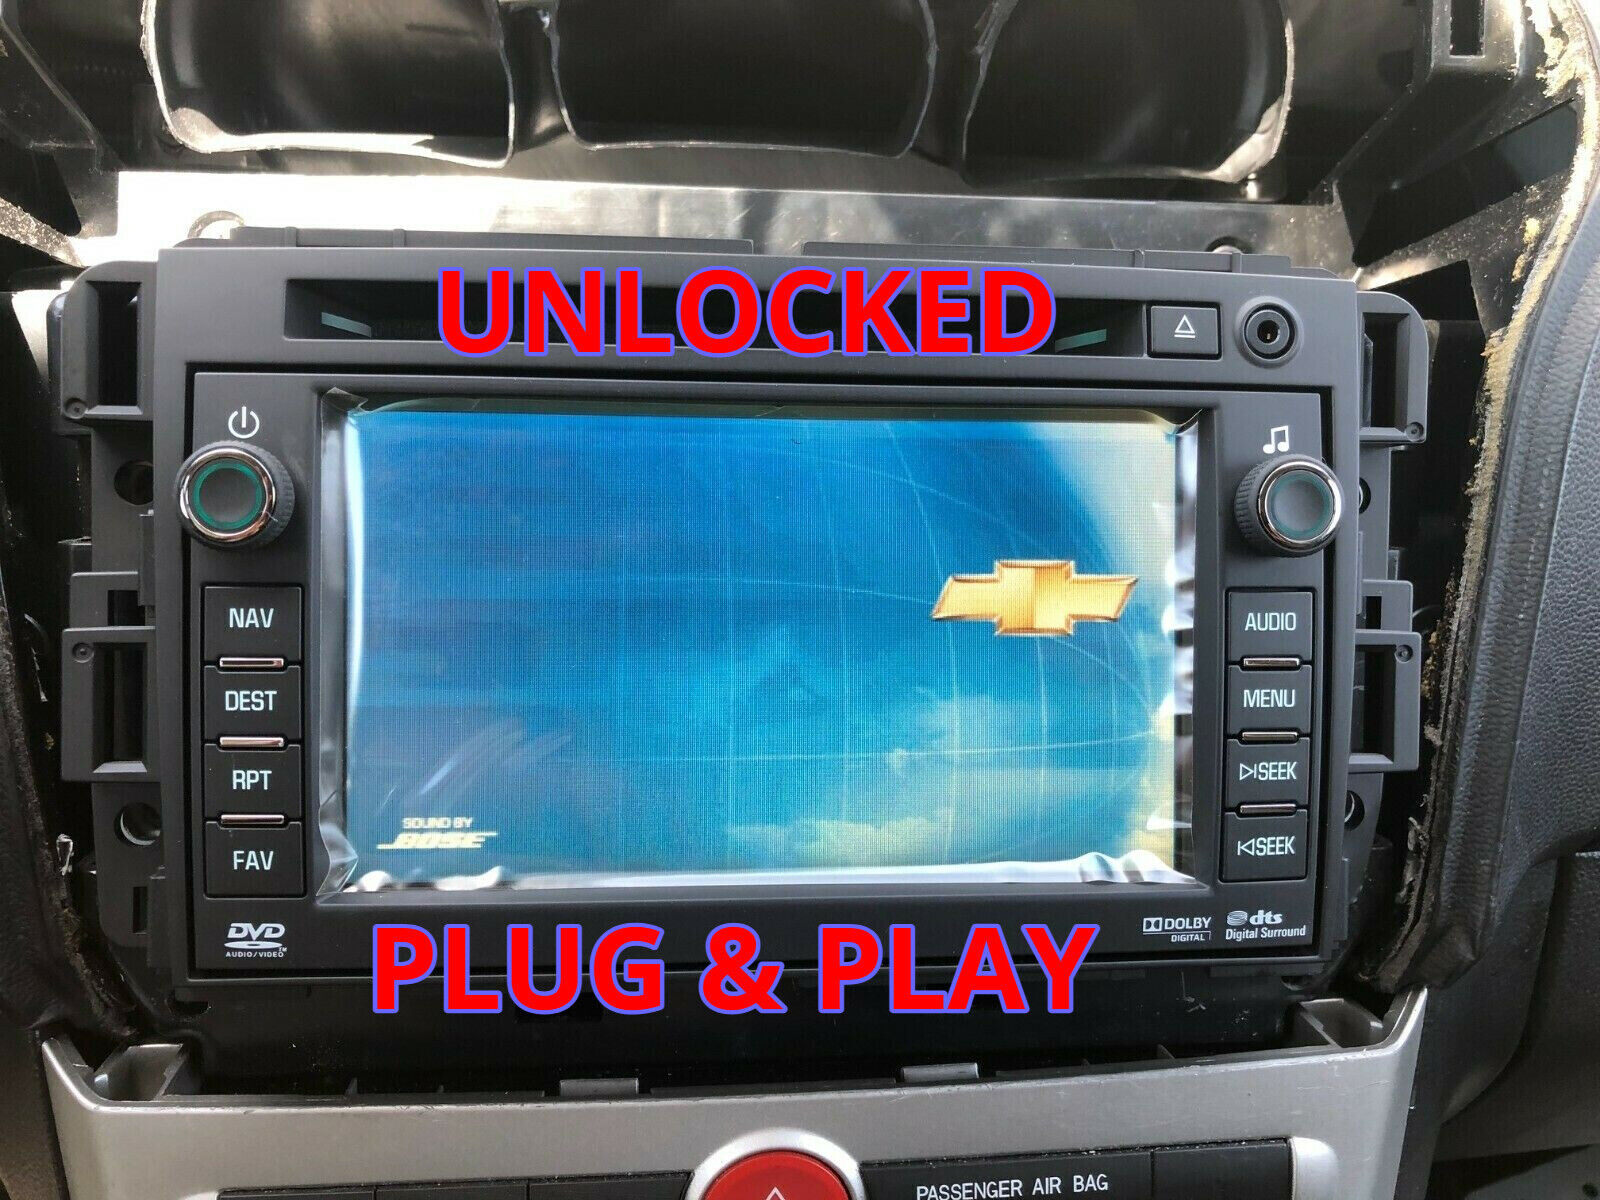 10-13 chevy gmc navigation dvd, USB port radio unlocked